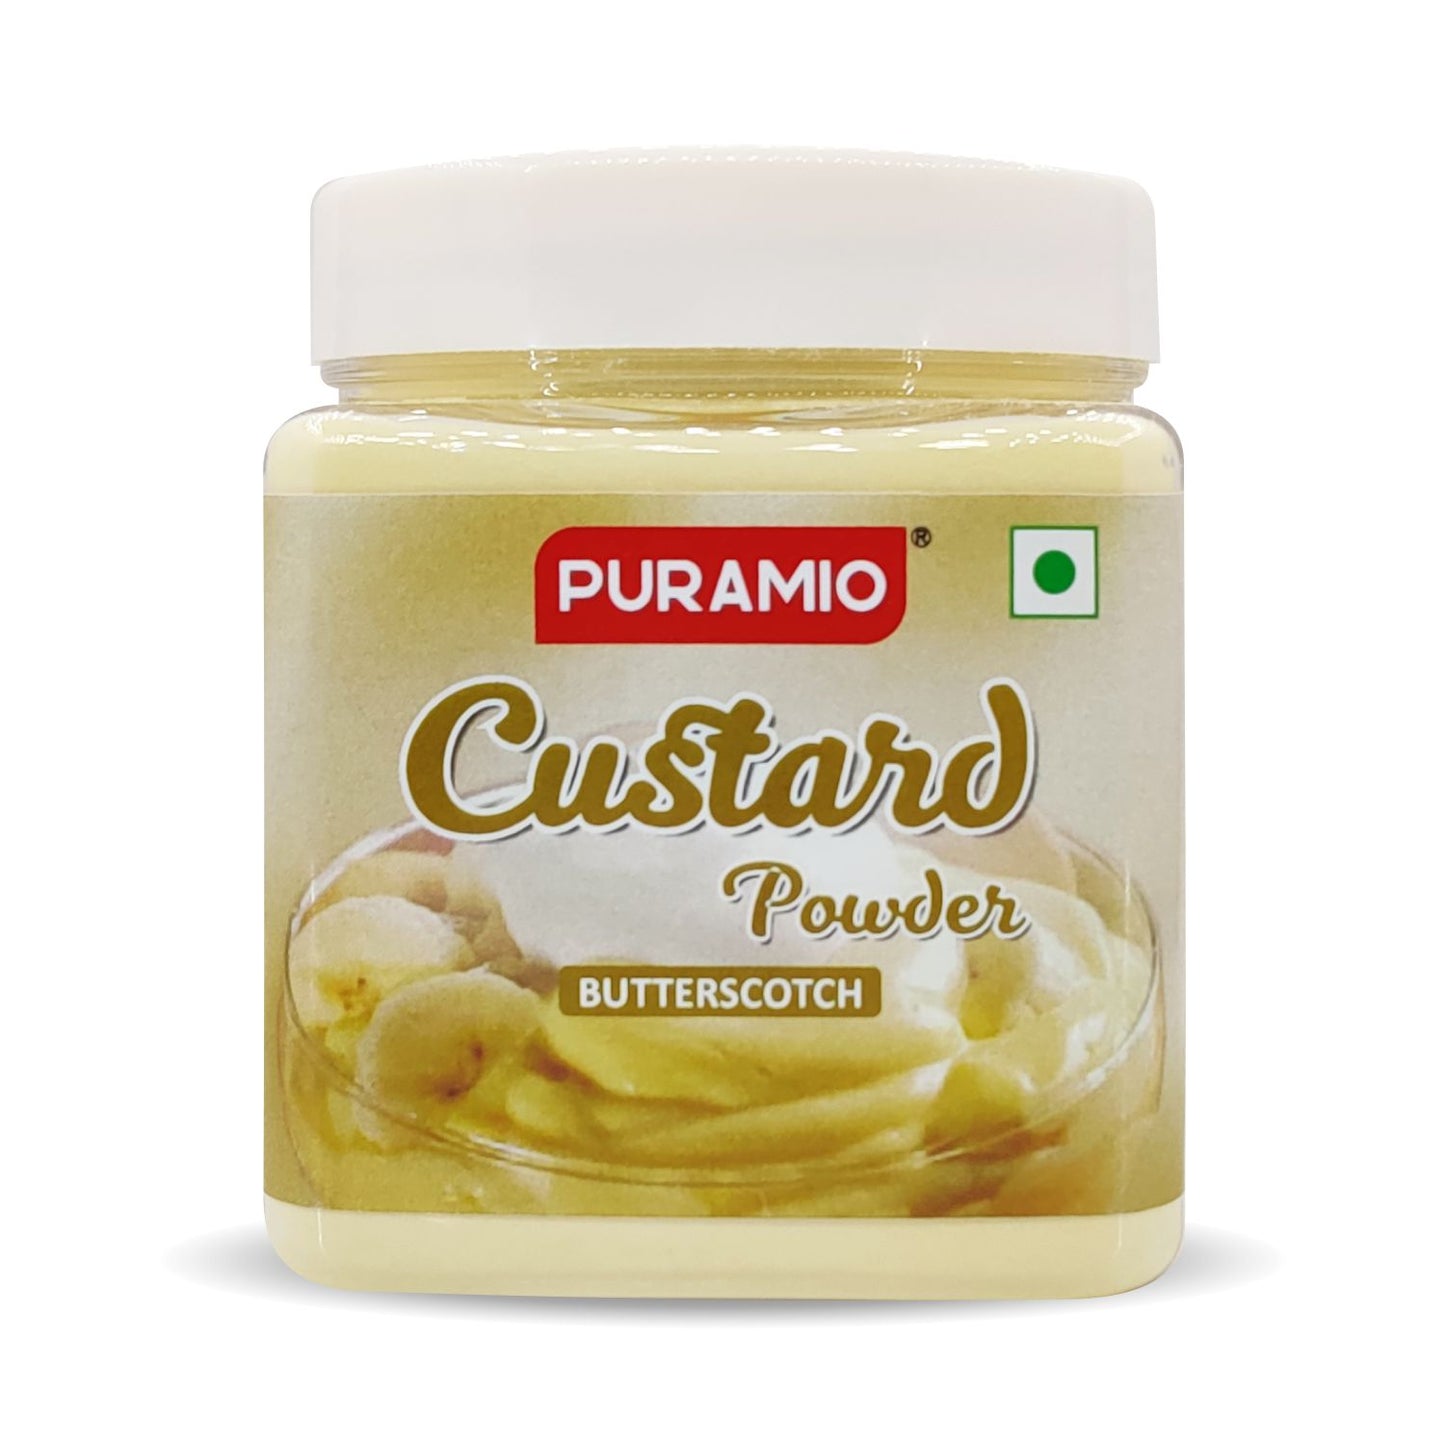 Puramio Custard Powder (Butterscotch)